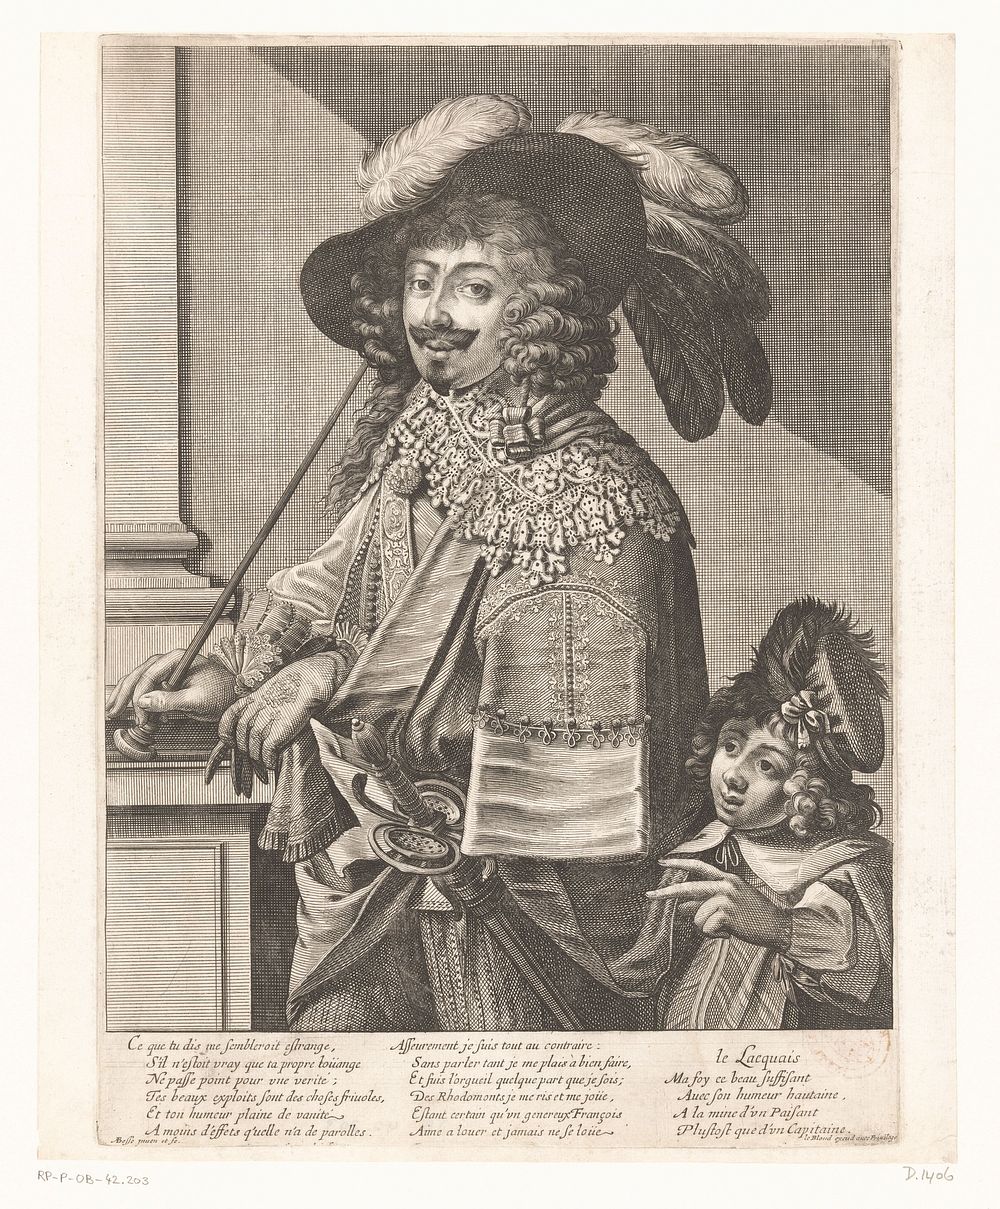 Franse man met een lakei (1635) by Abraham Bosse, Abraham Bosse and Jean Leblond I